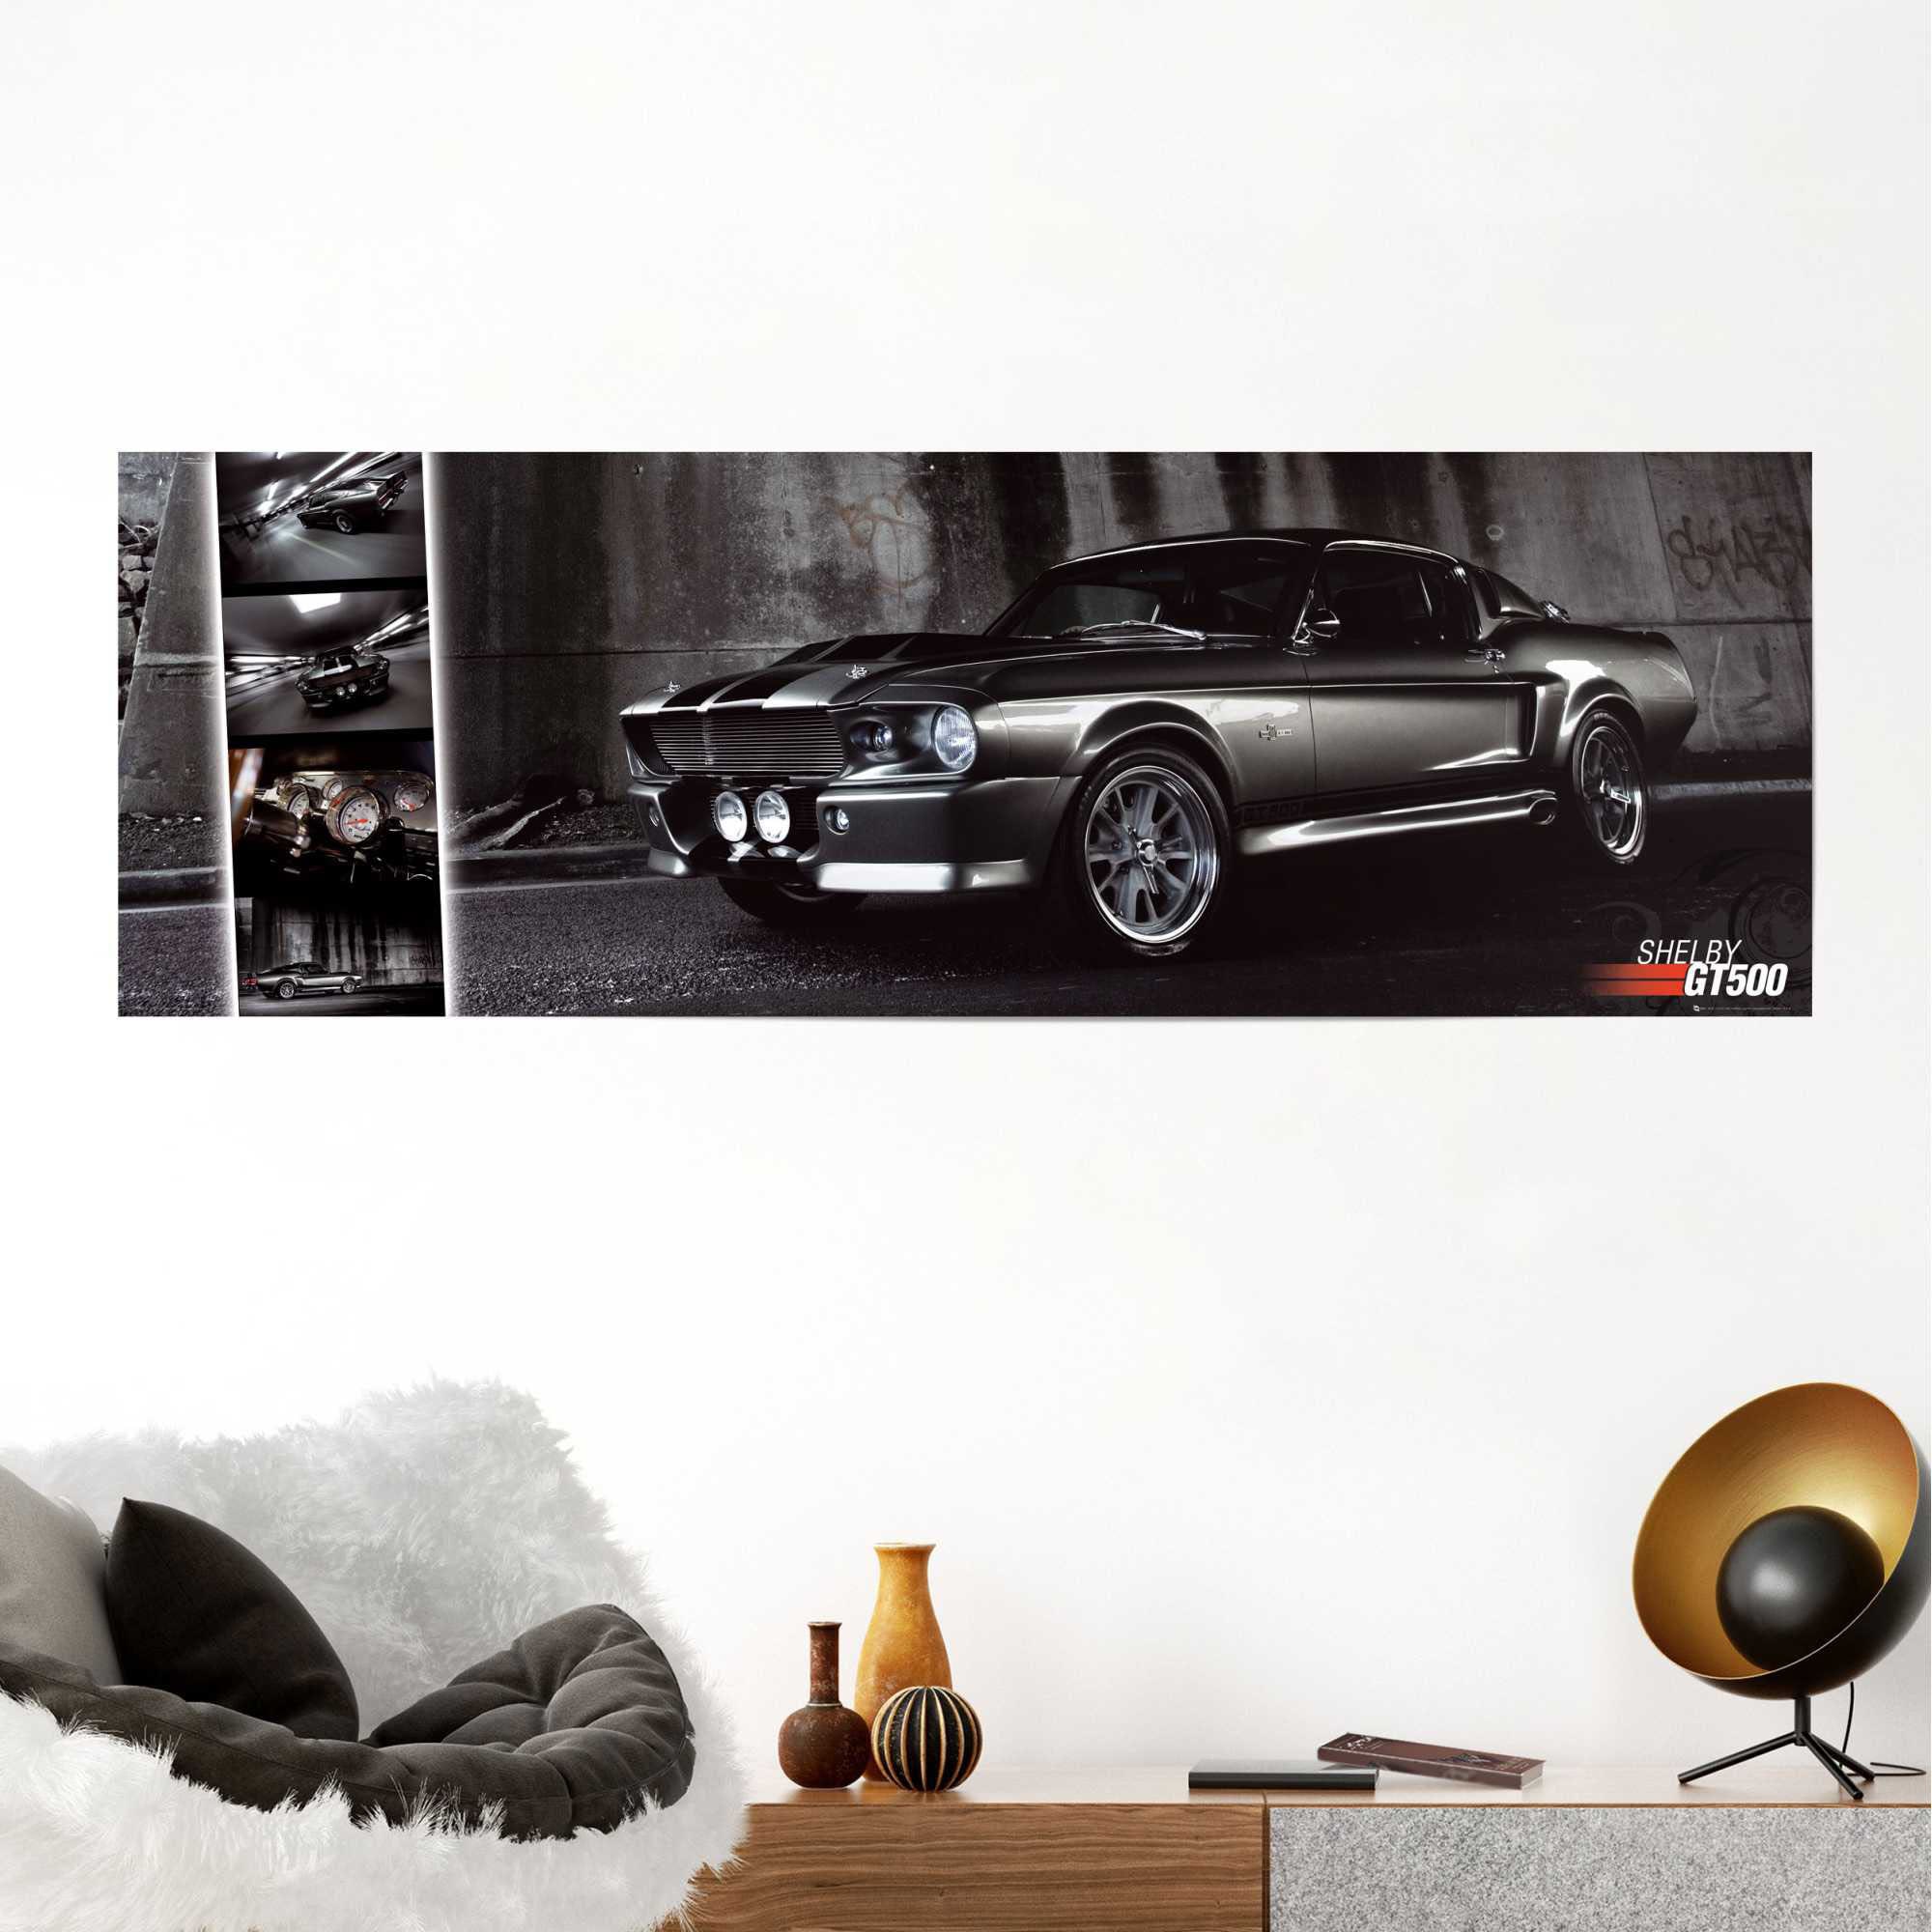 kaufen Reinders! | (1 Easton GT500«, »Ford BAUR Mustang Poster St.)